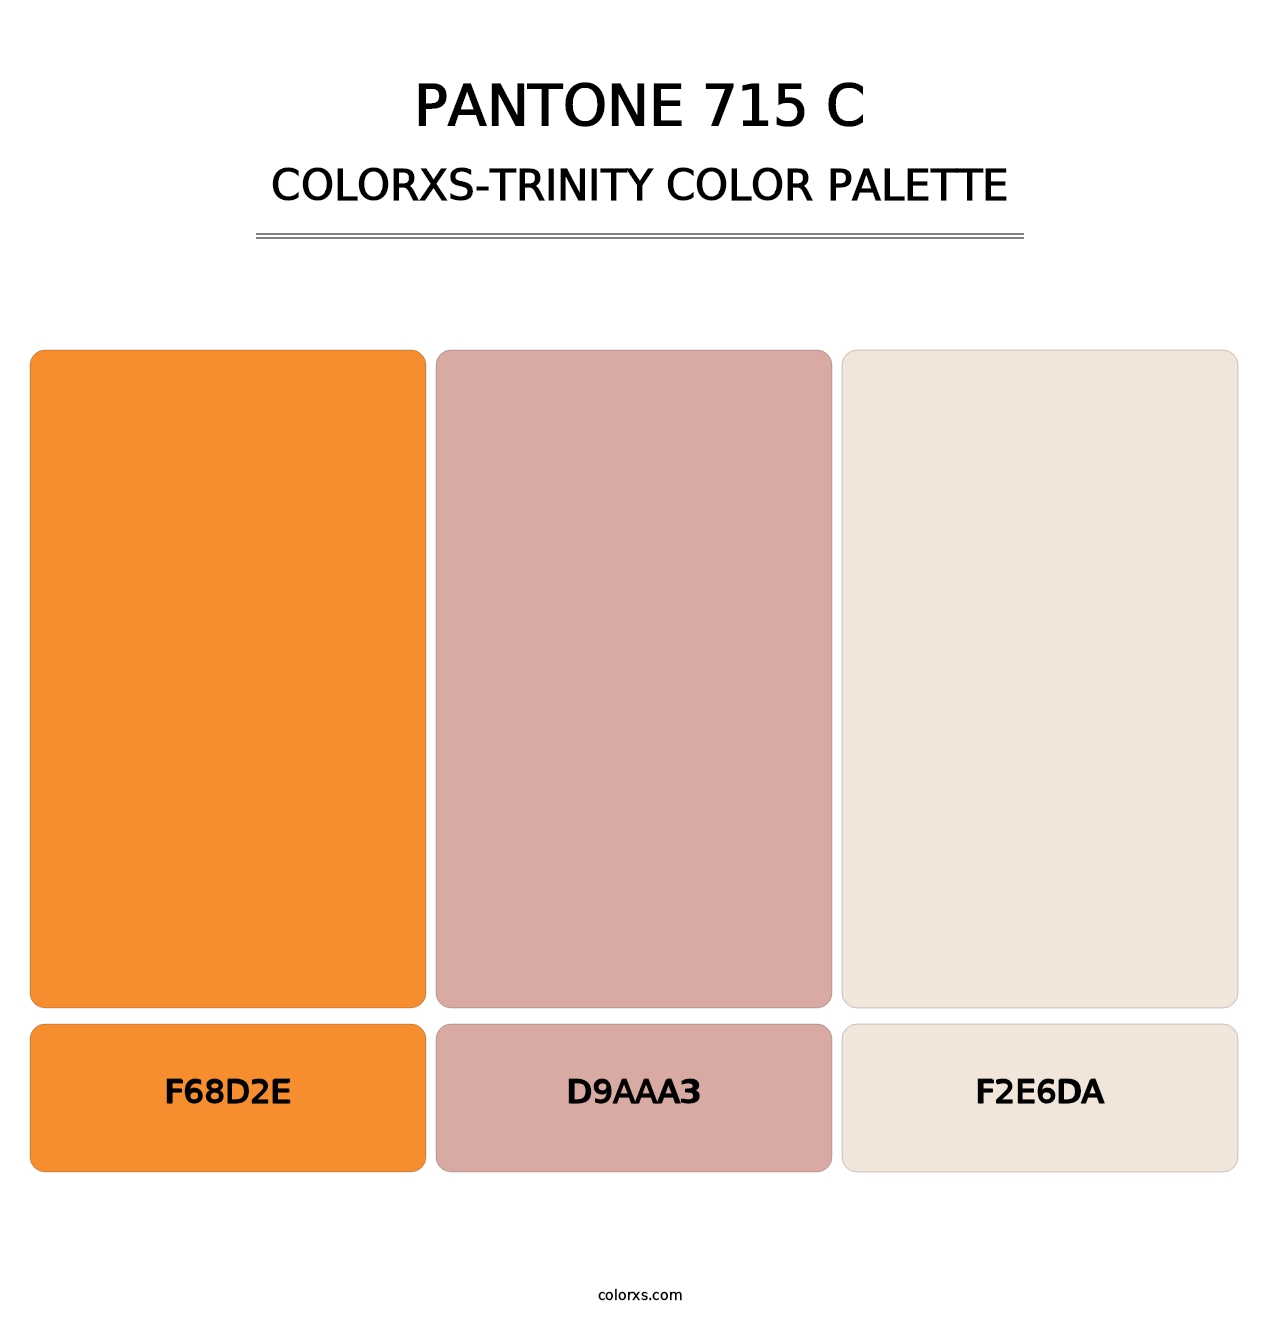 PANTONE 715 C - Colorxs Trinity Palette